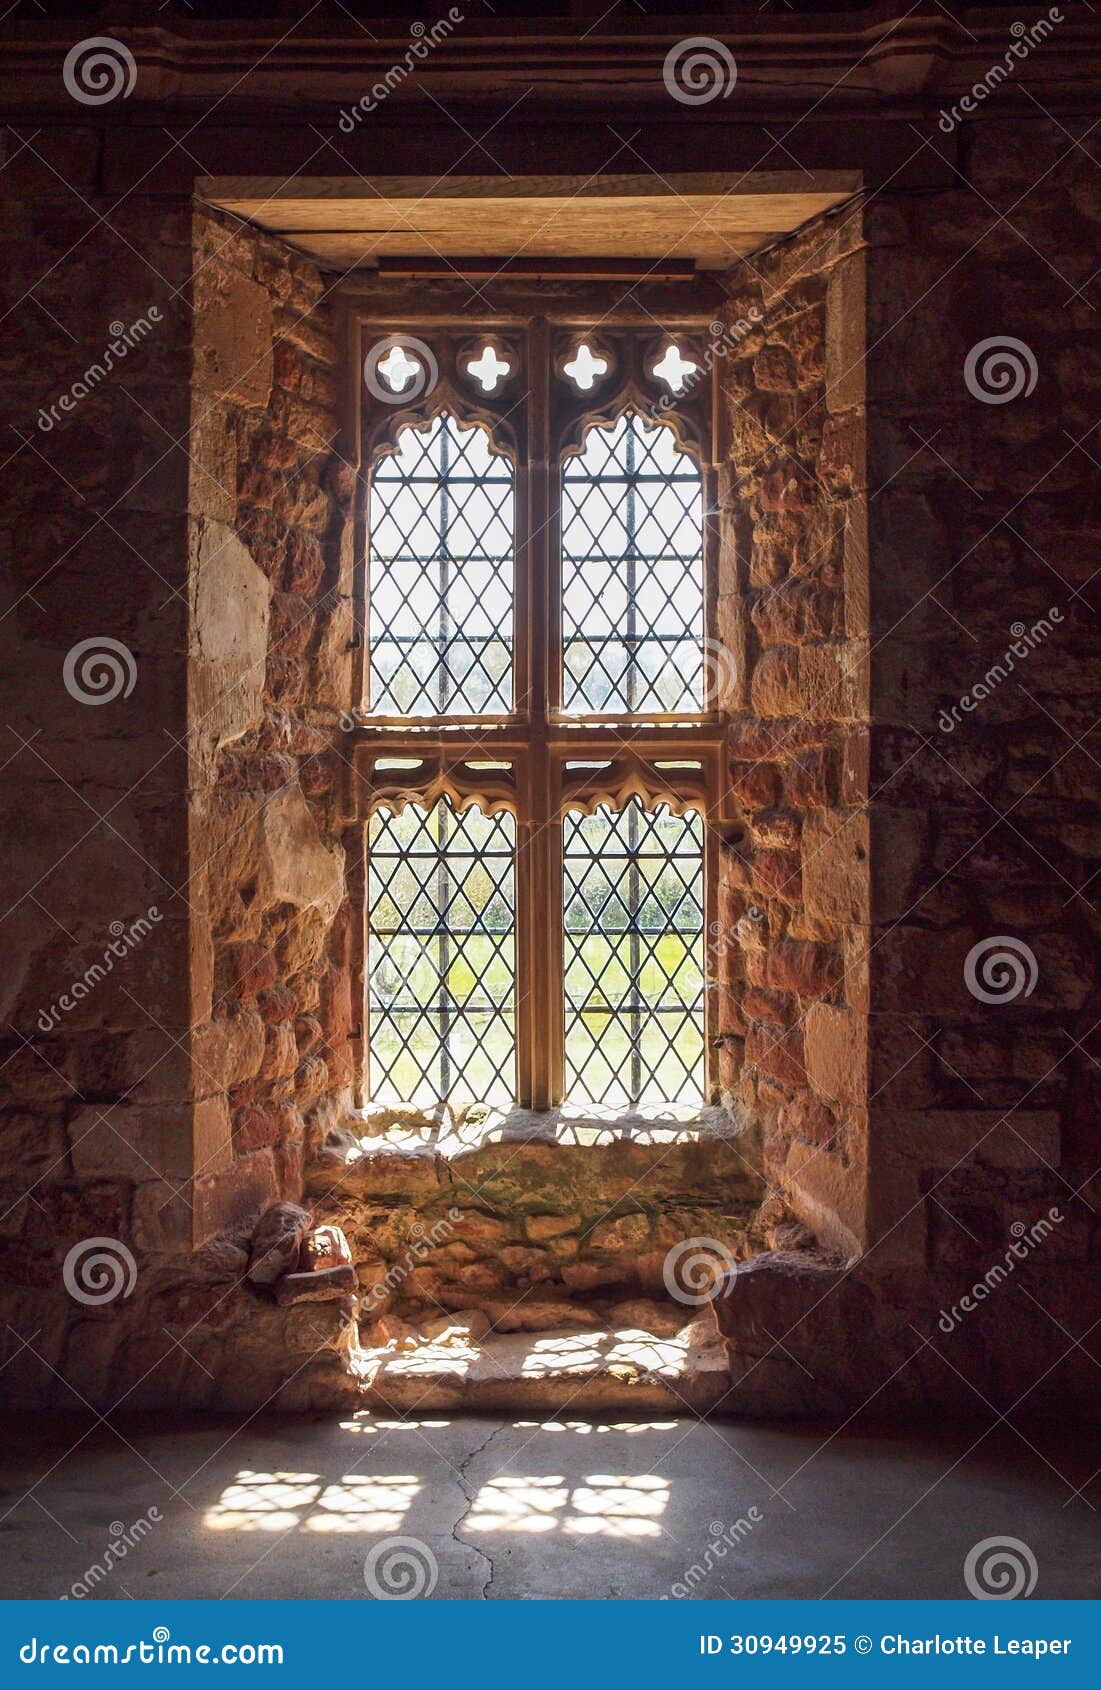 old medieval window